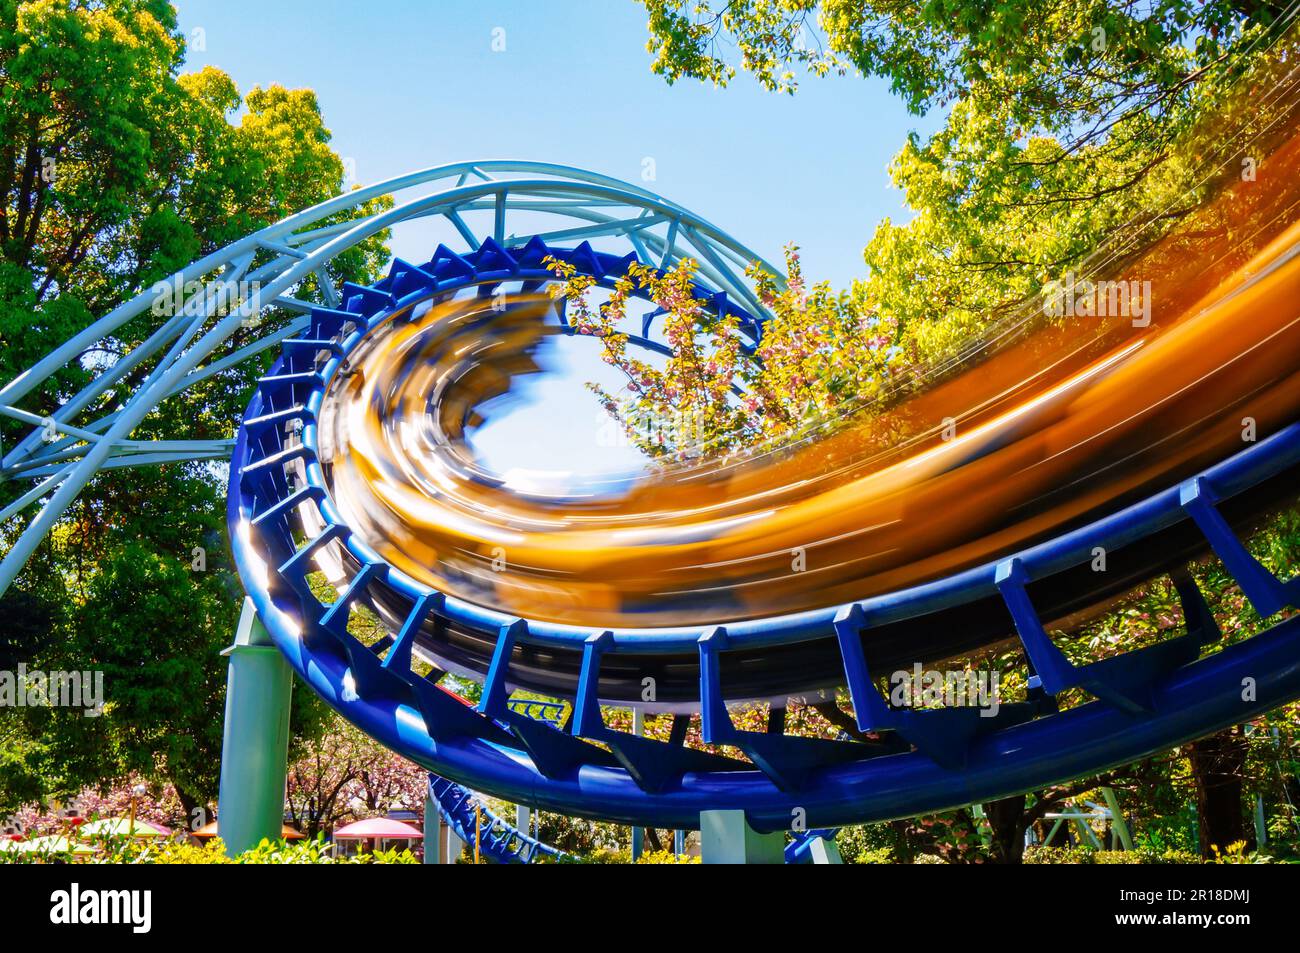 Amusement park roller coaster Stock Photo - Alamy